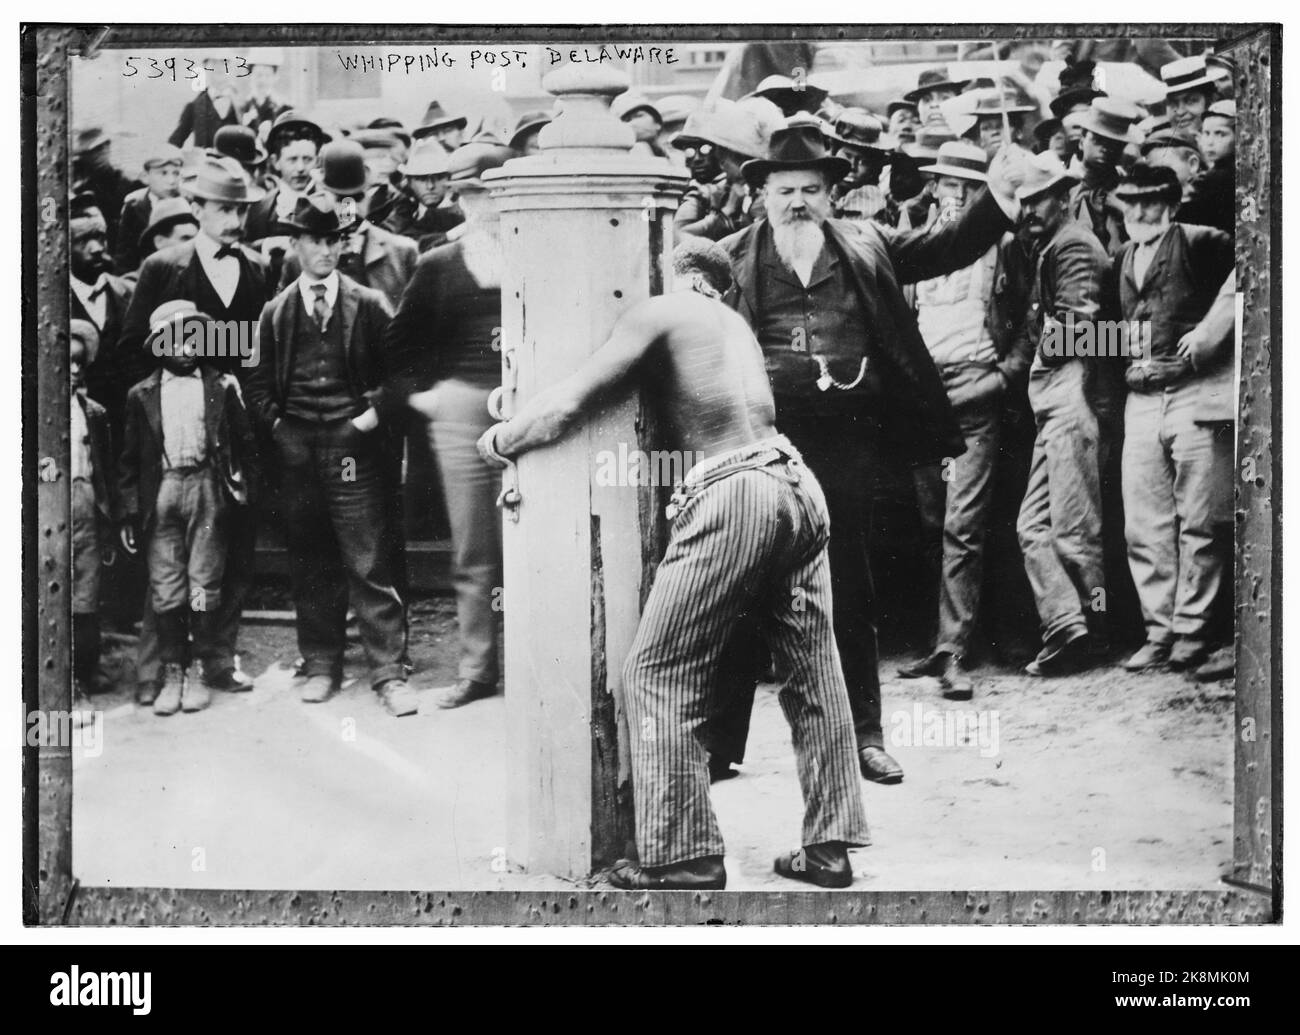 Whipping Post, Delaware, USA - 1900 - möglicherweise im Kent County Jail, Dover, Delaware, USA. Stockfoto